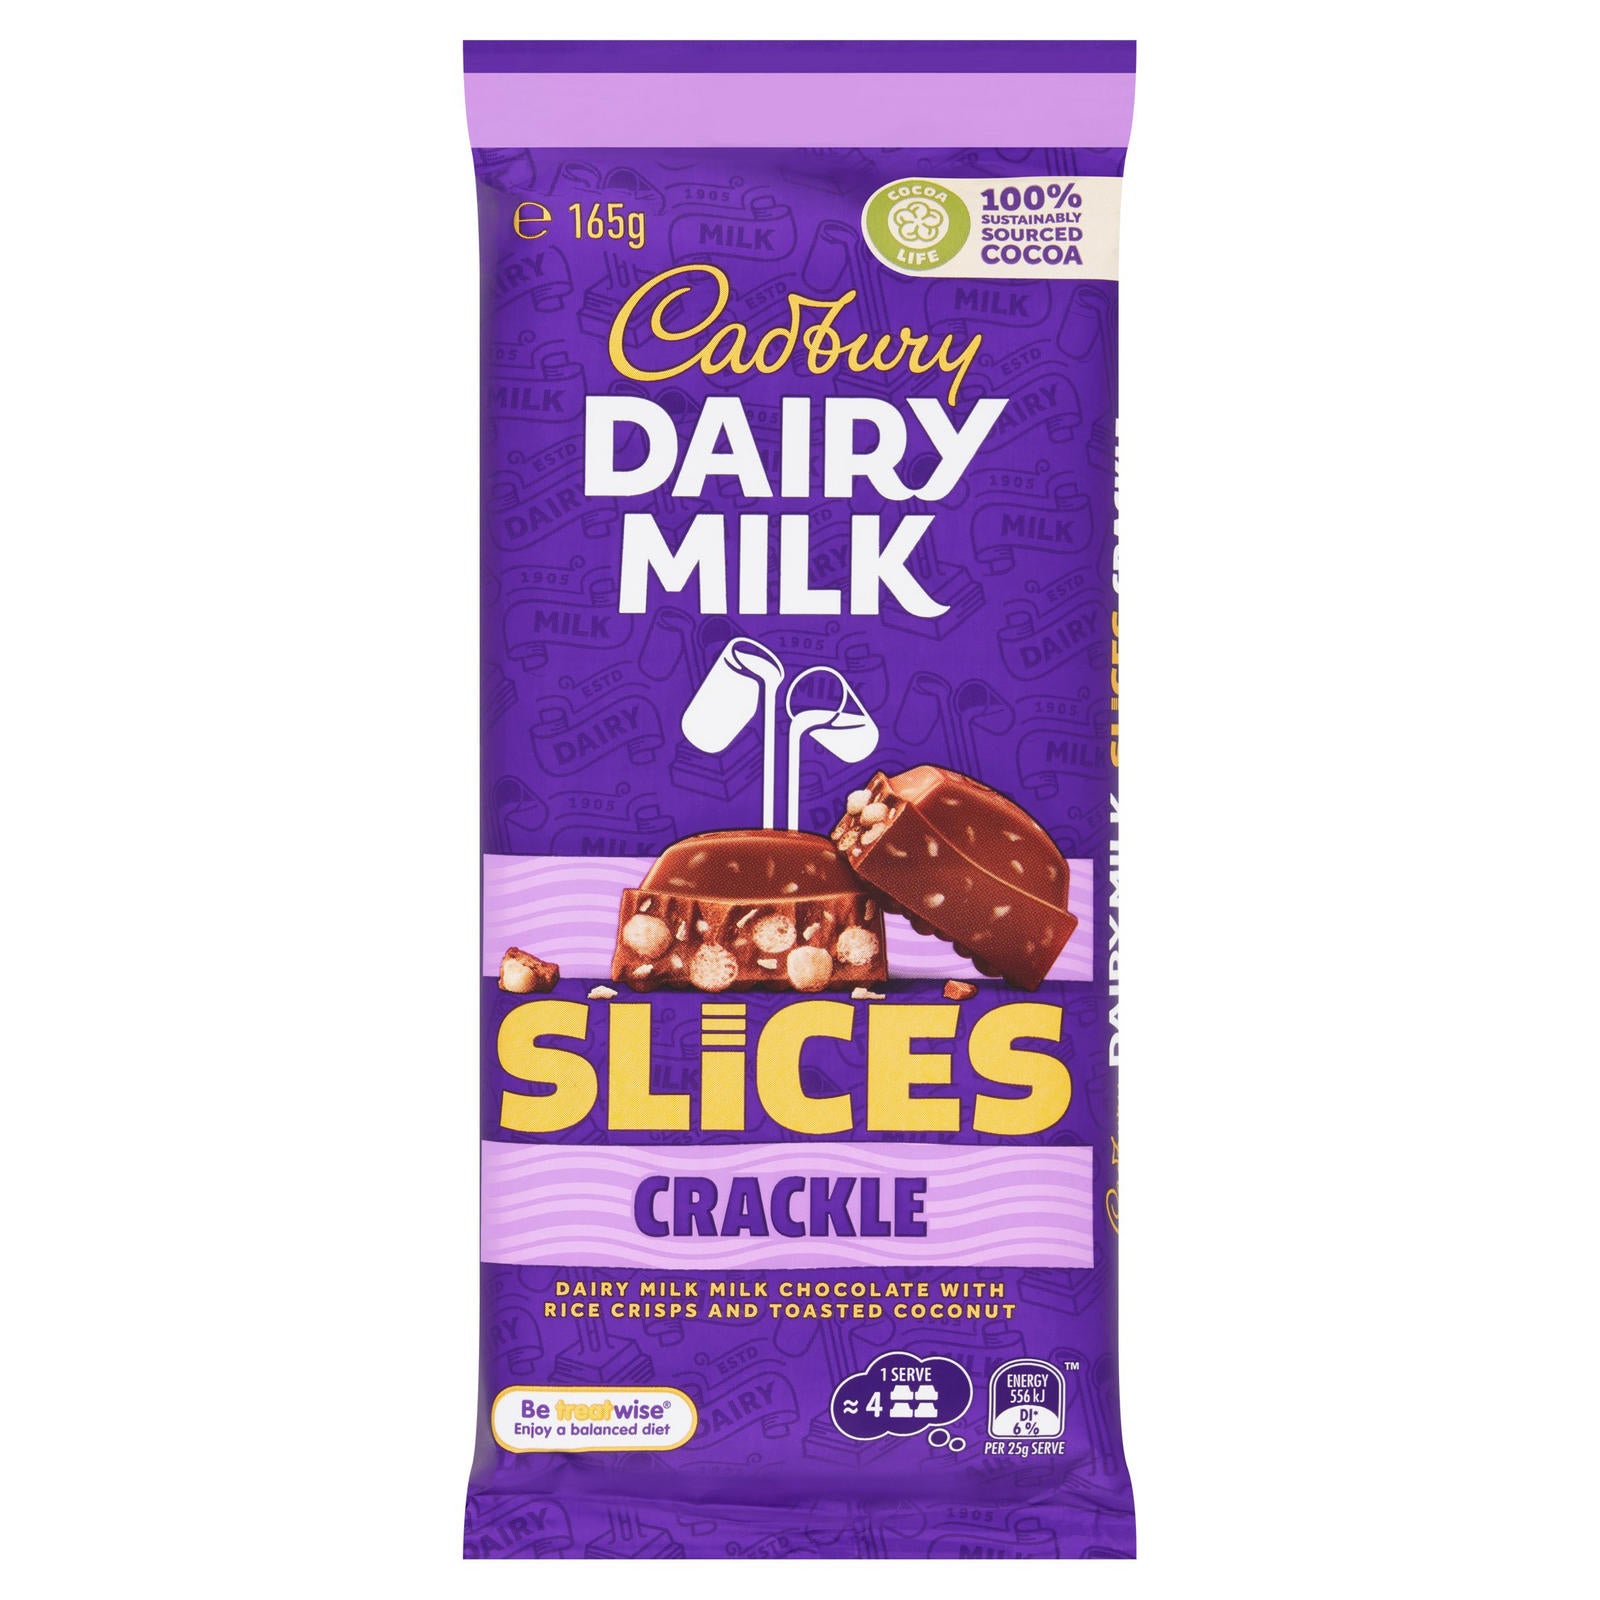 Cadbury's Dairy Milk Slices Crackle (165g)